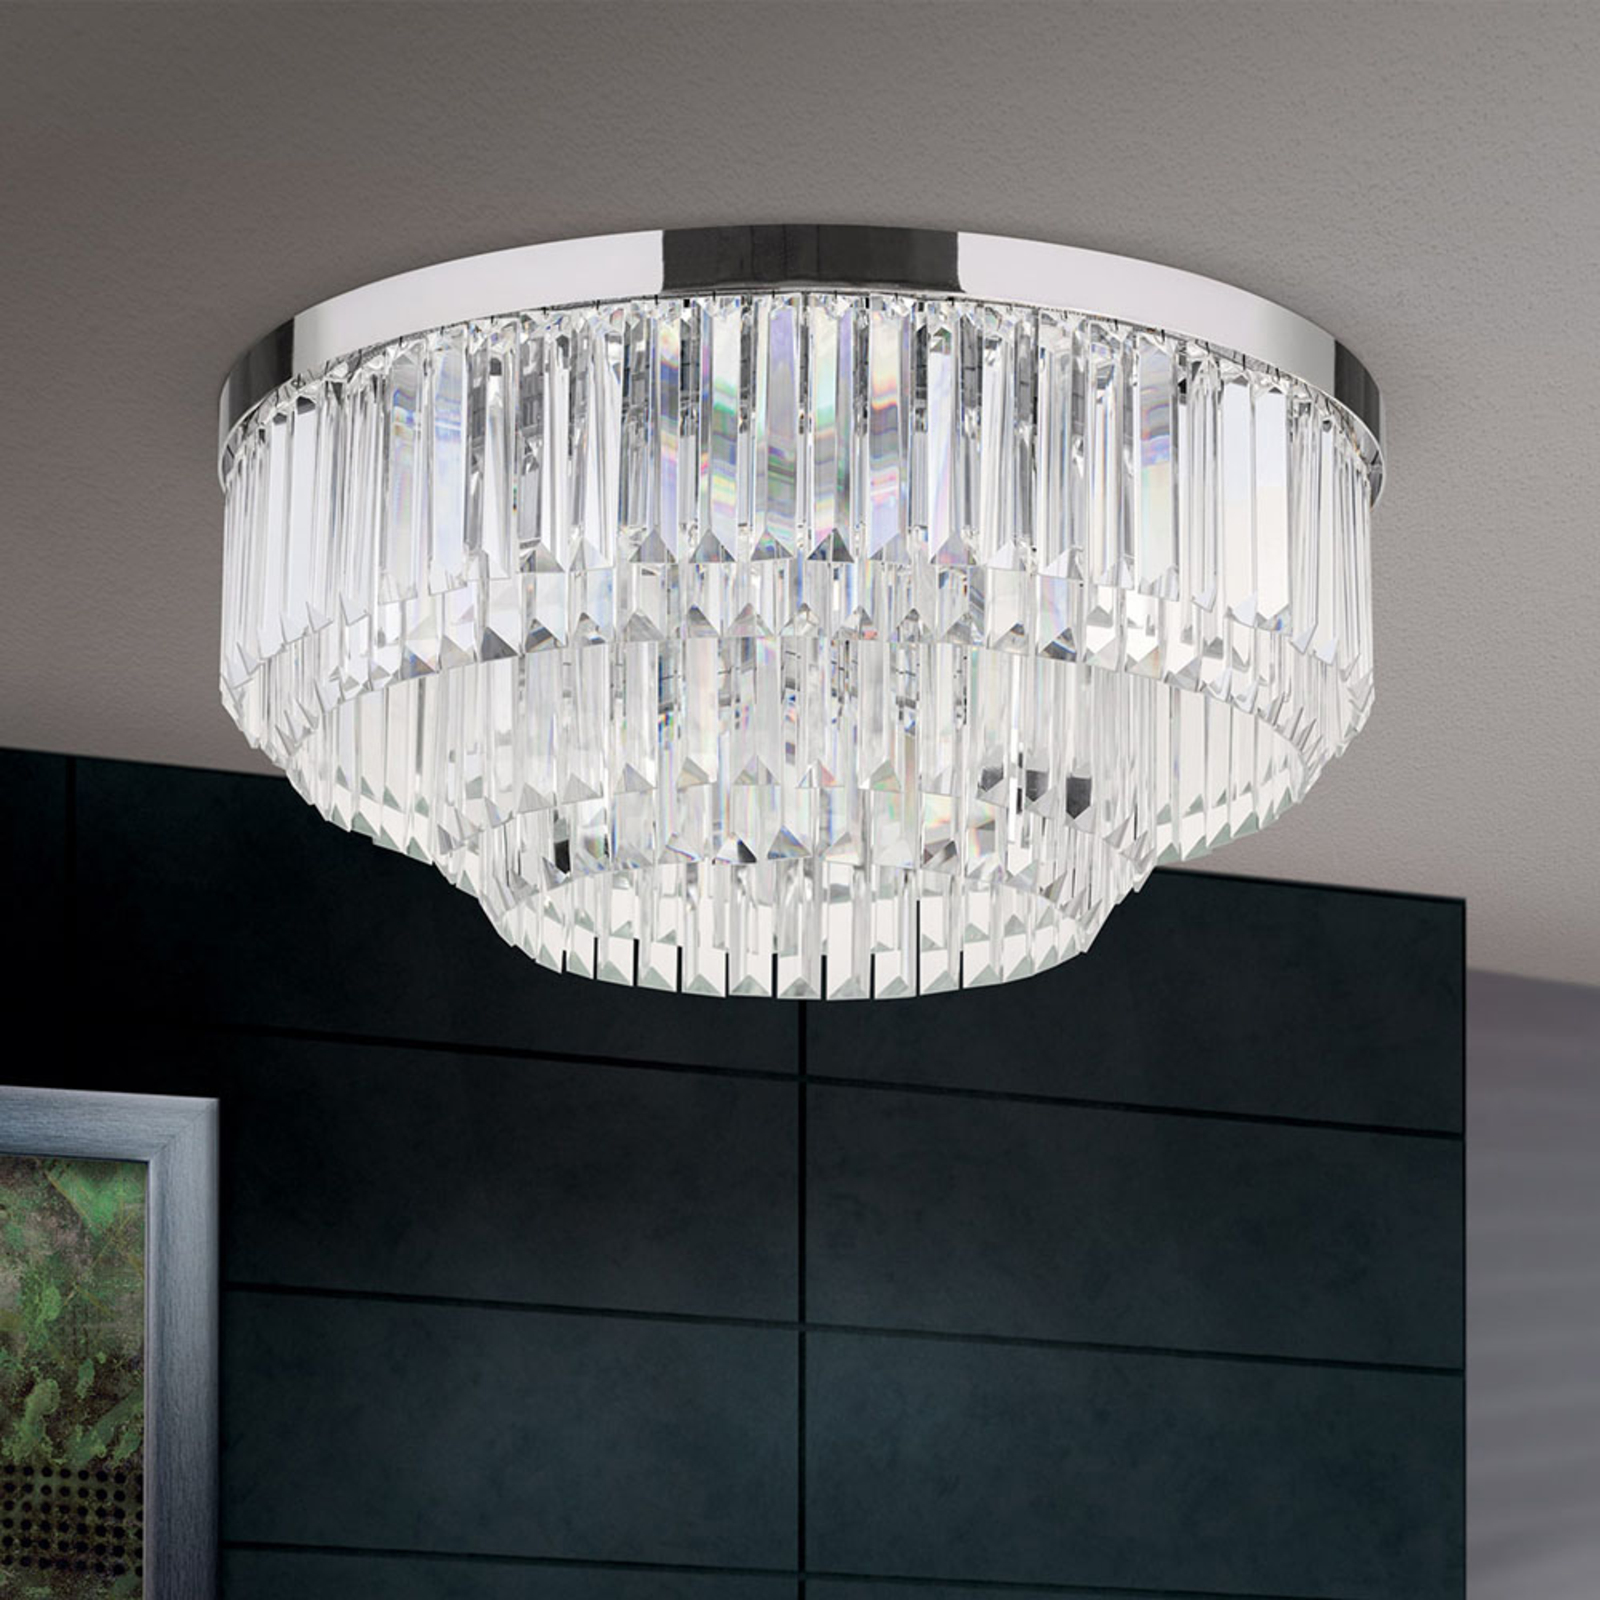 LED-Deckenleuchte Prism, chrom, Ø 55 cm